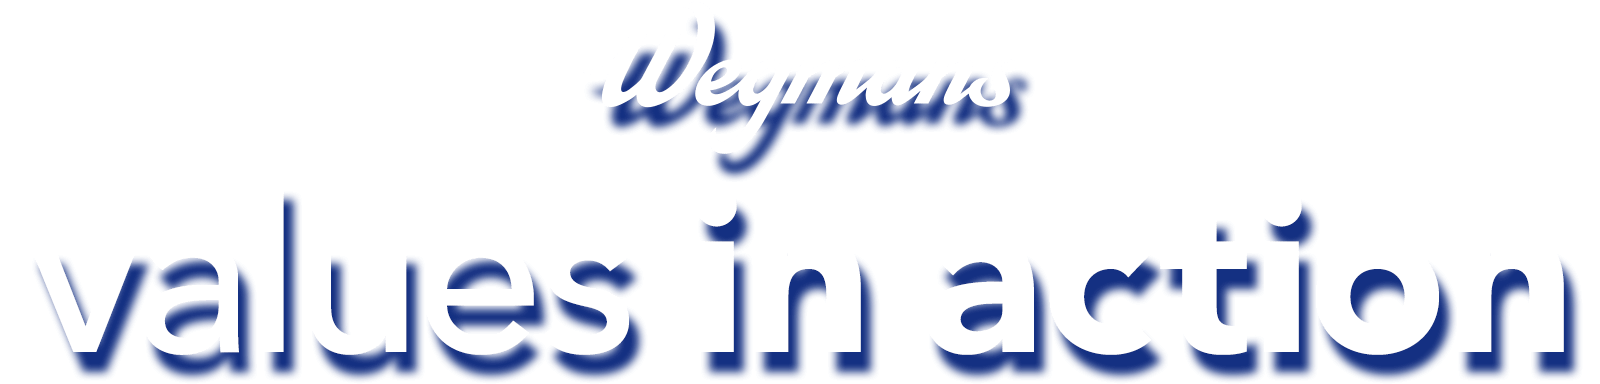 Wegmans Values in Action